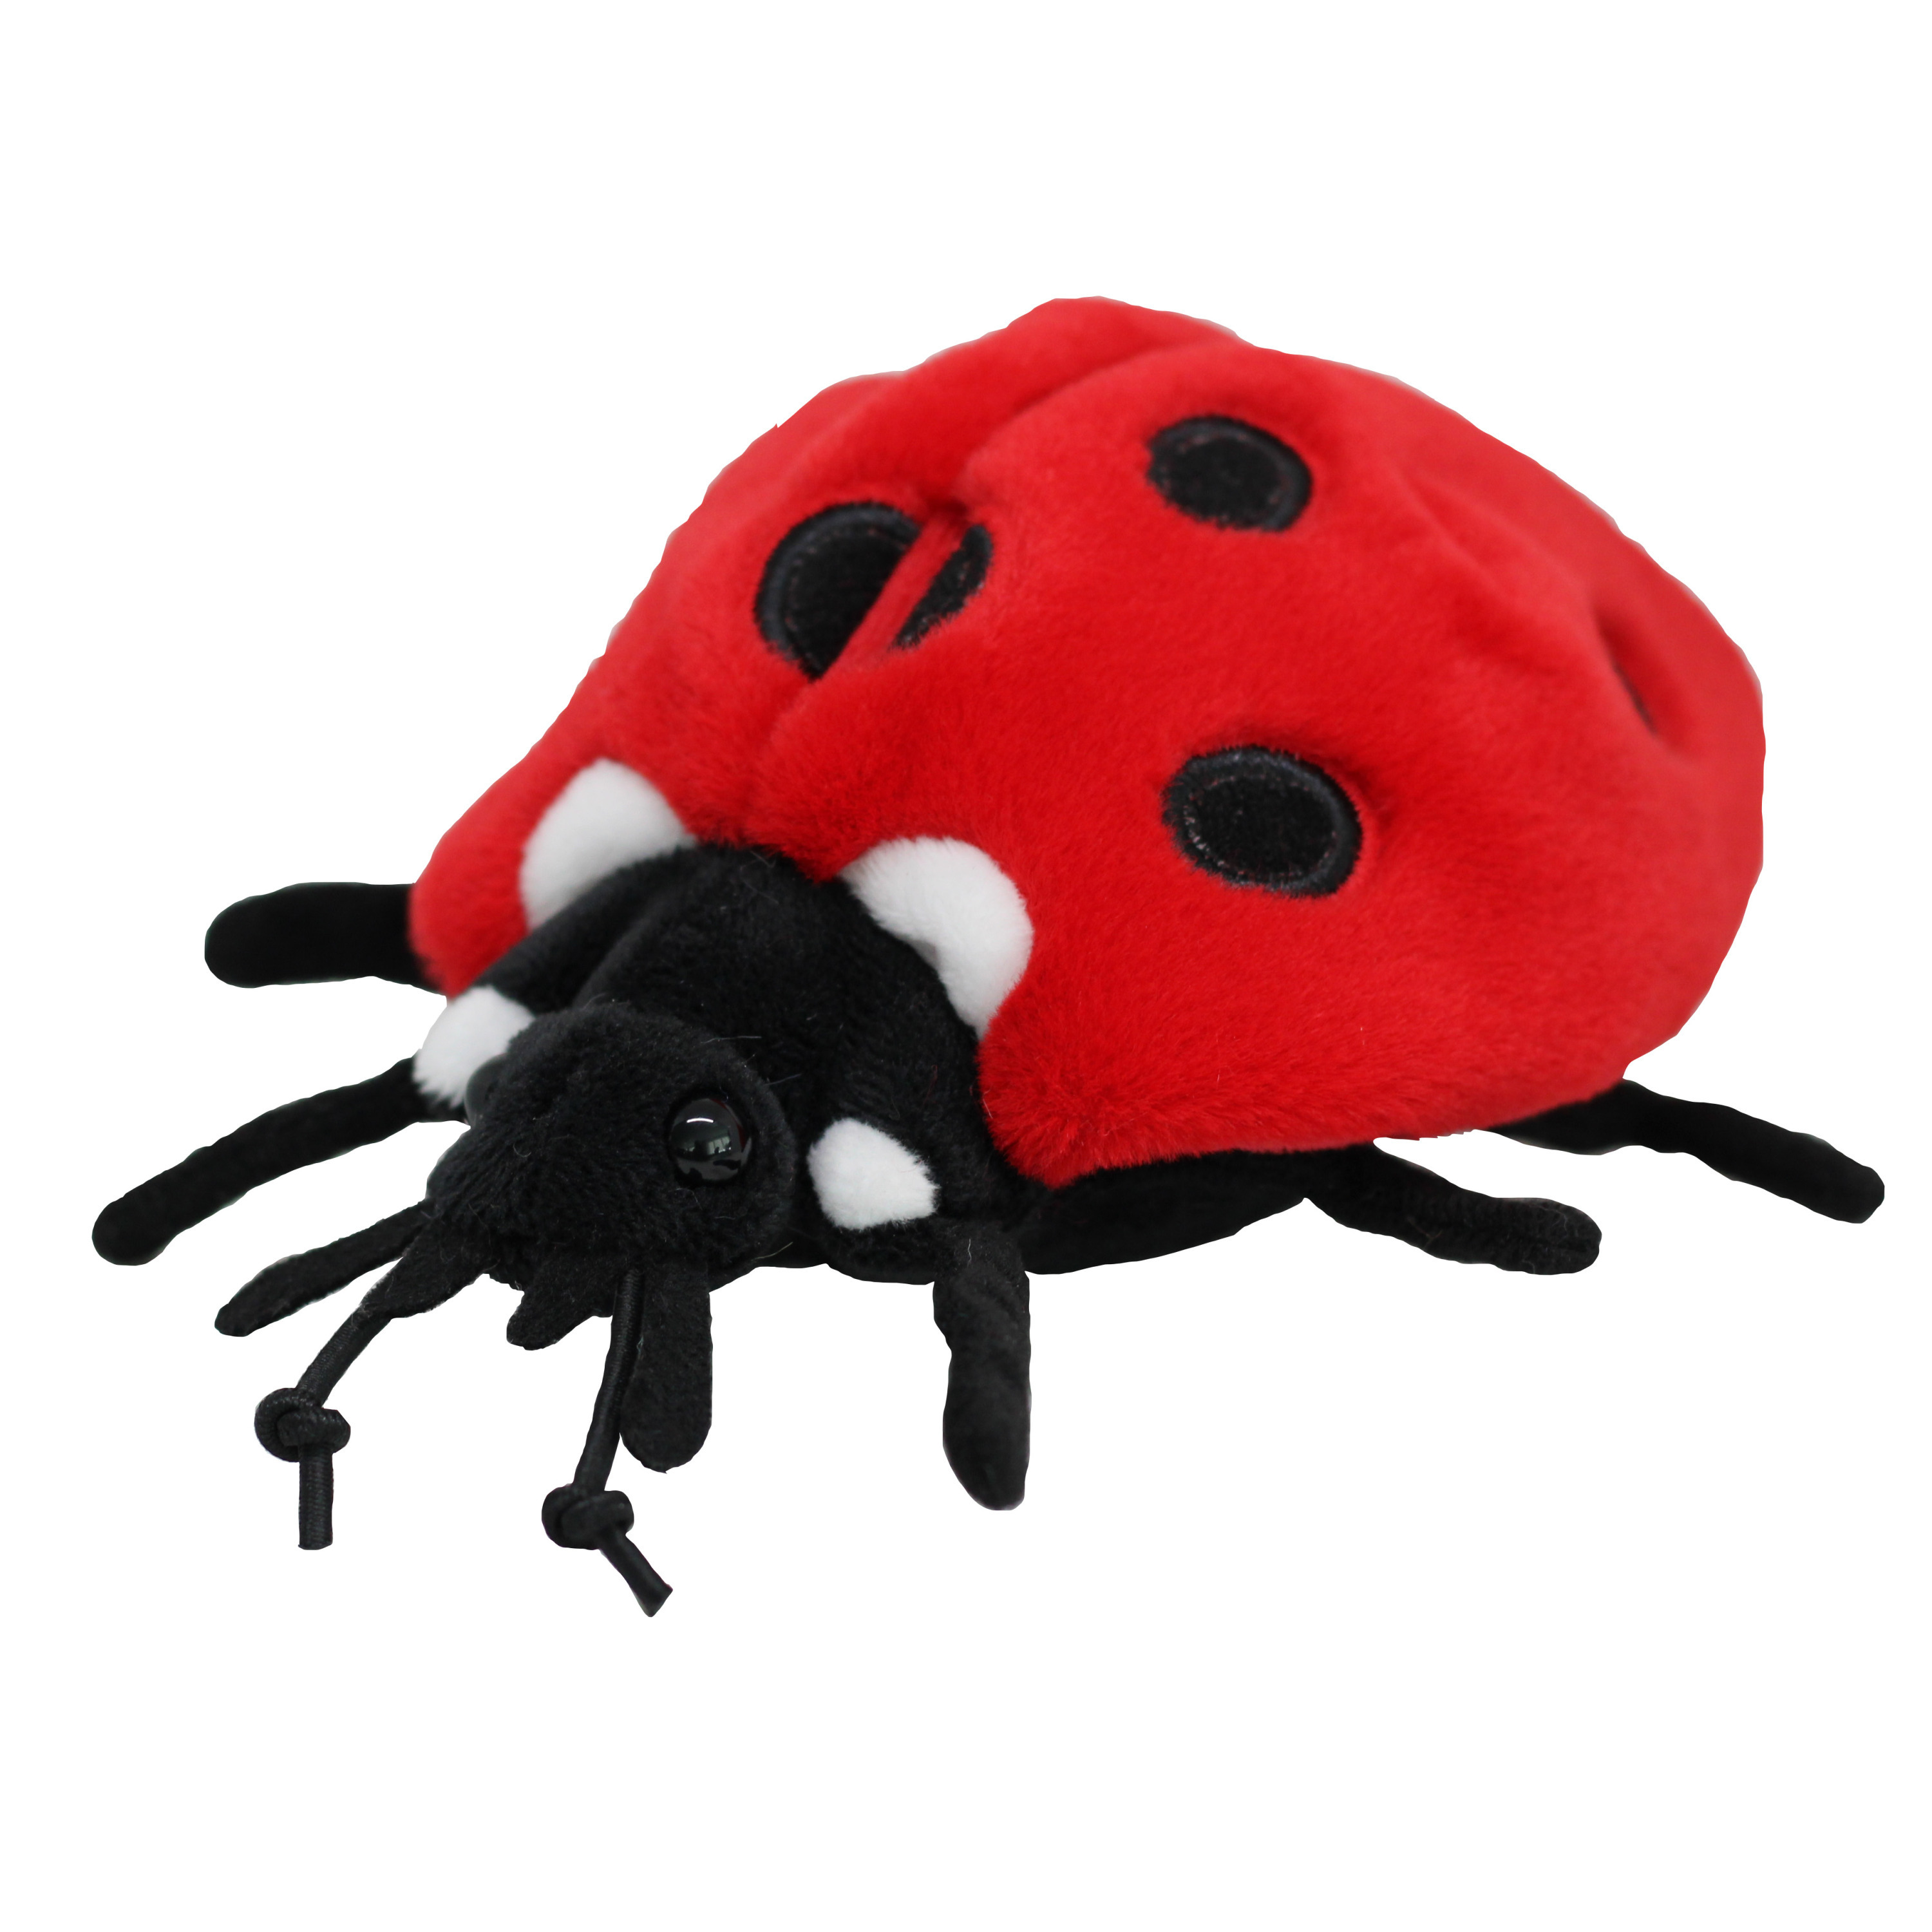 Knuffeldier Lieveheersbeestje zachte pluche stof premium kwaliteit knuffels rood-zwart 15 cm